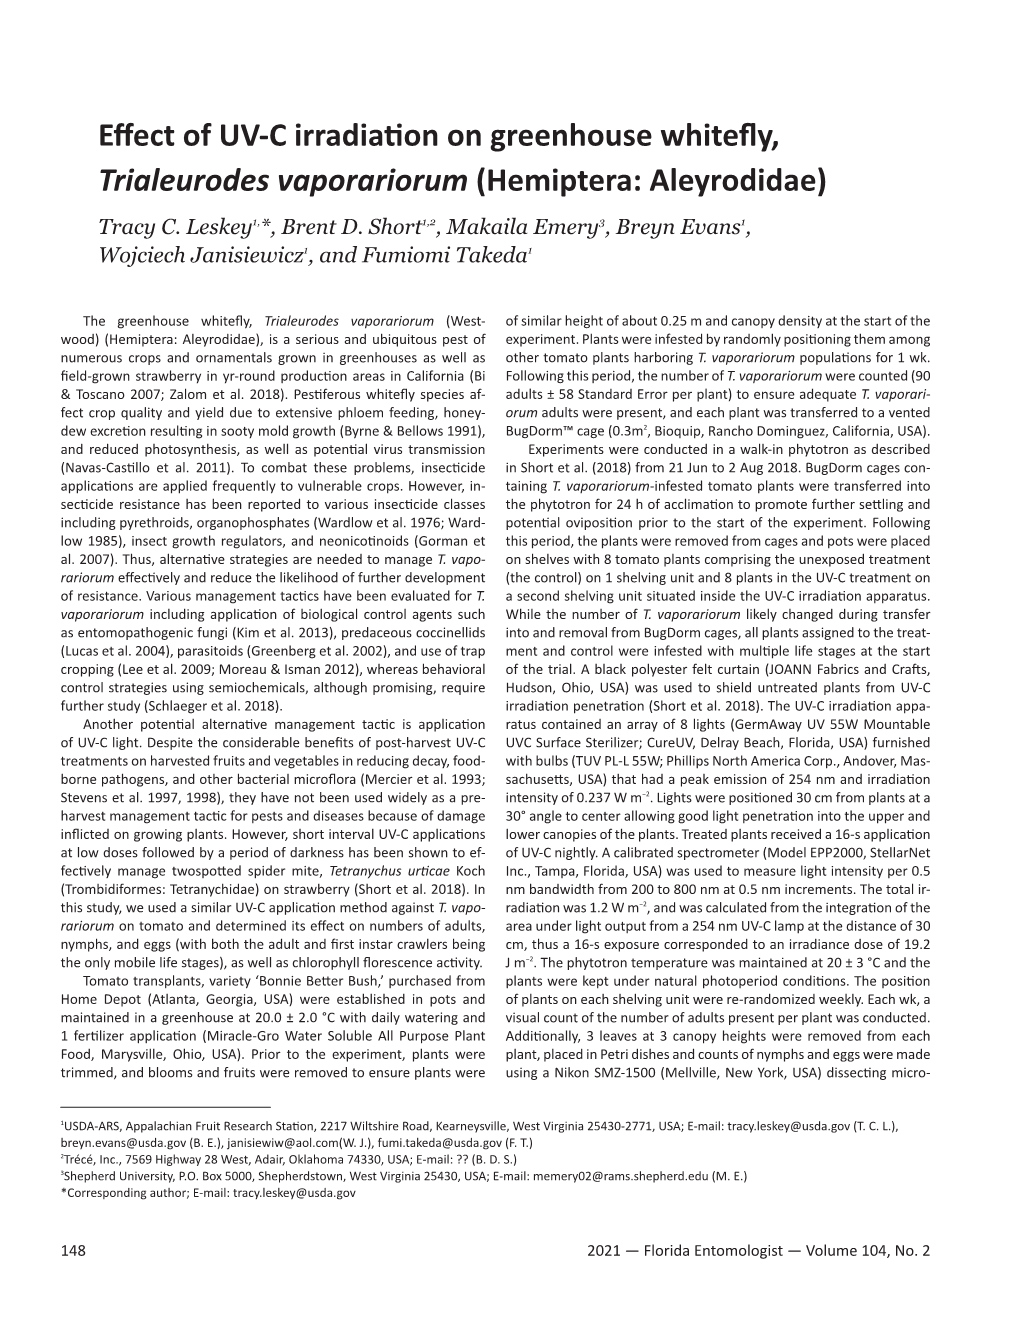 Effect of UV-C Irradiation on Greenhouse Whitefly, Trialeurodes Vaporariorum (Hemiptera: Aleyrodidae)